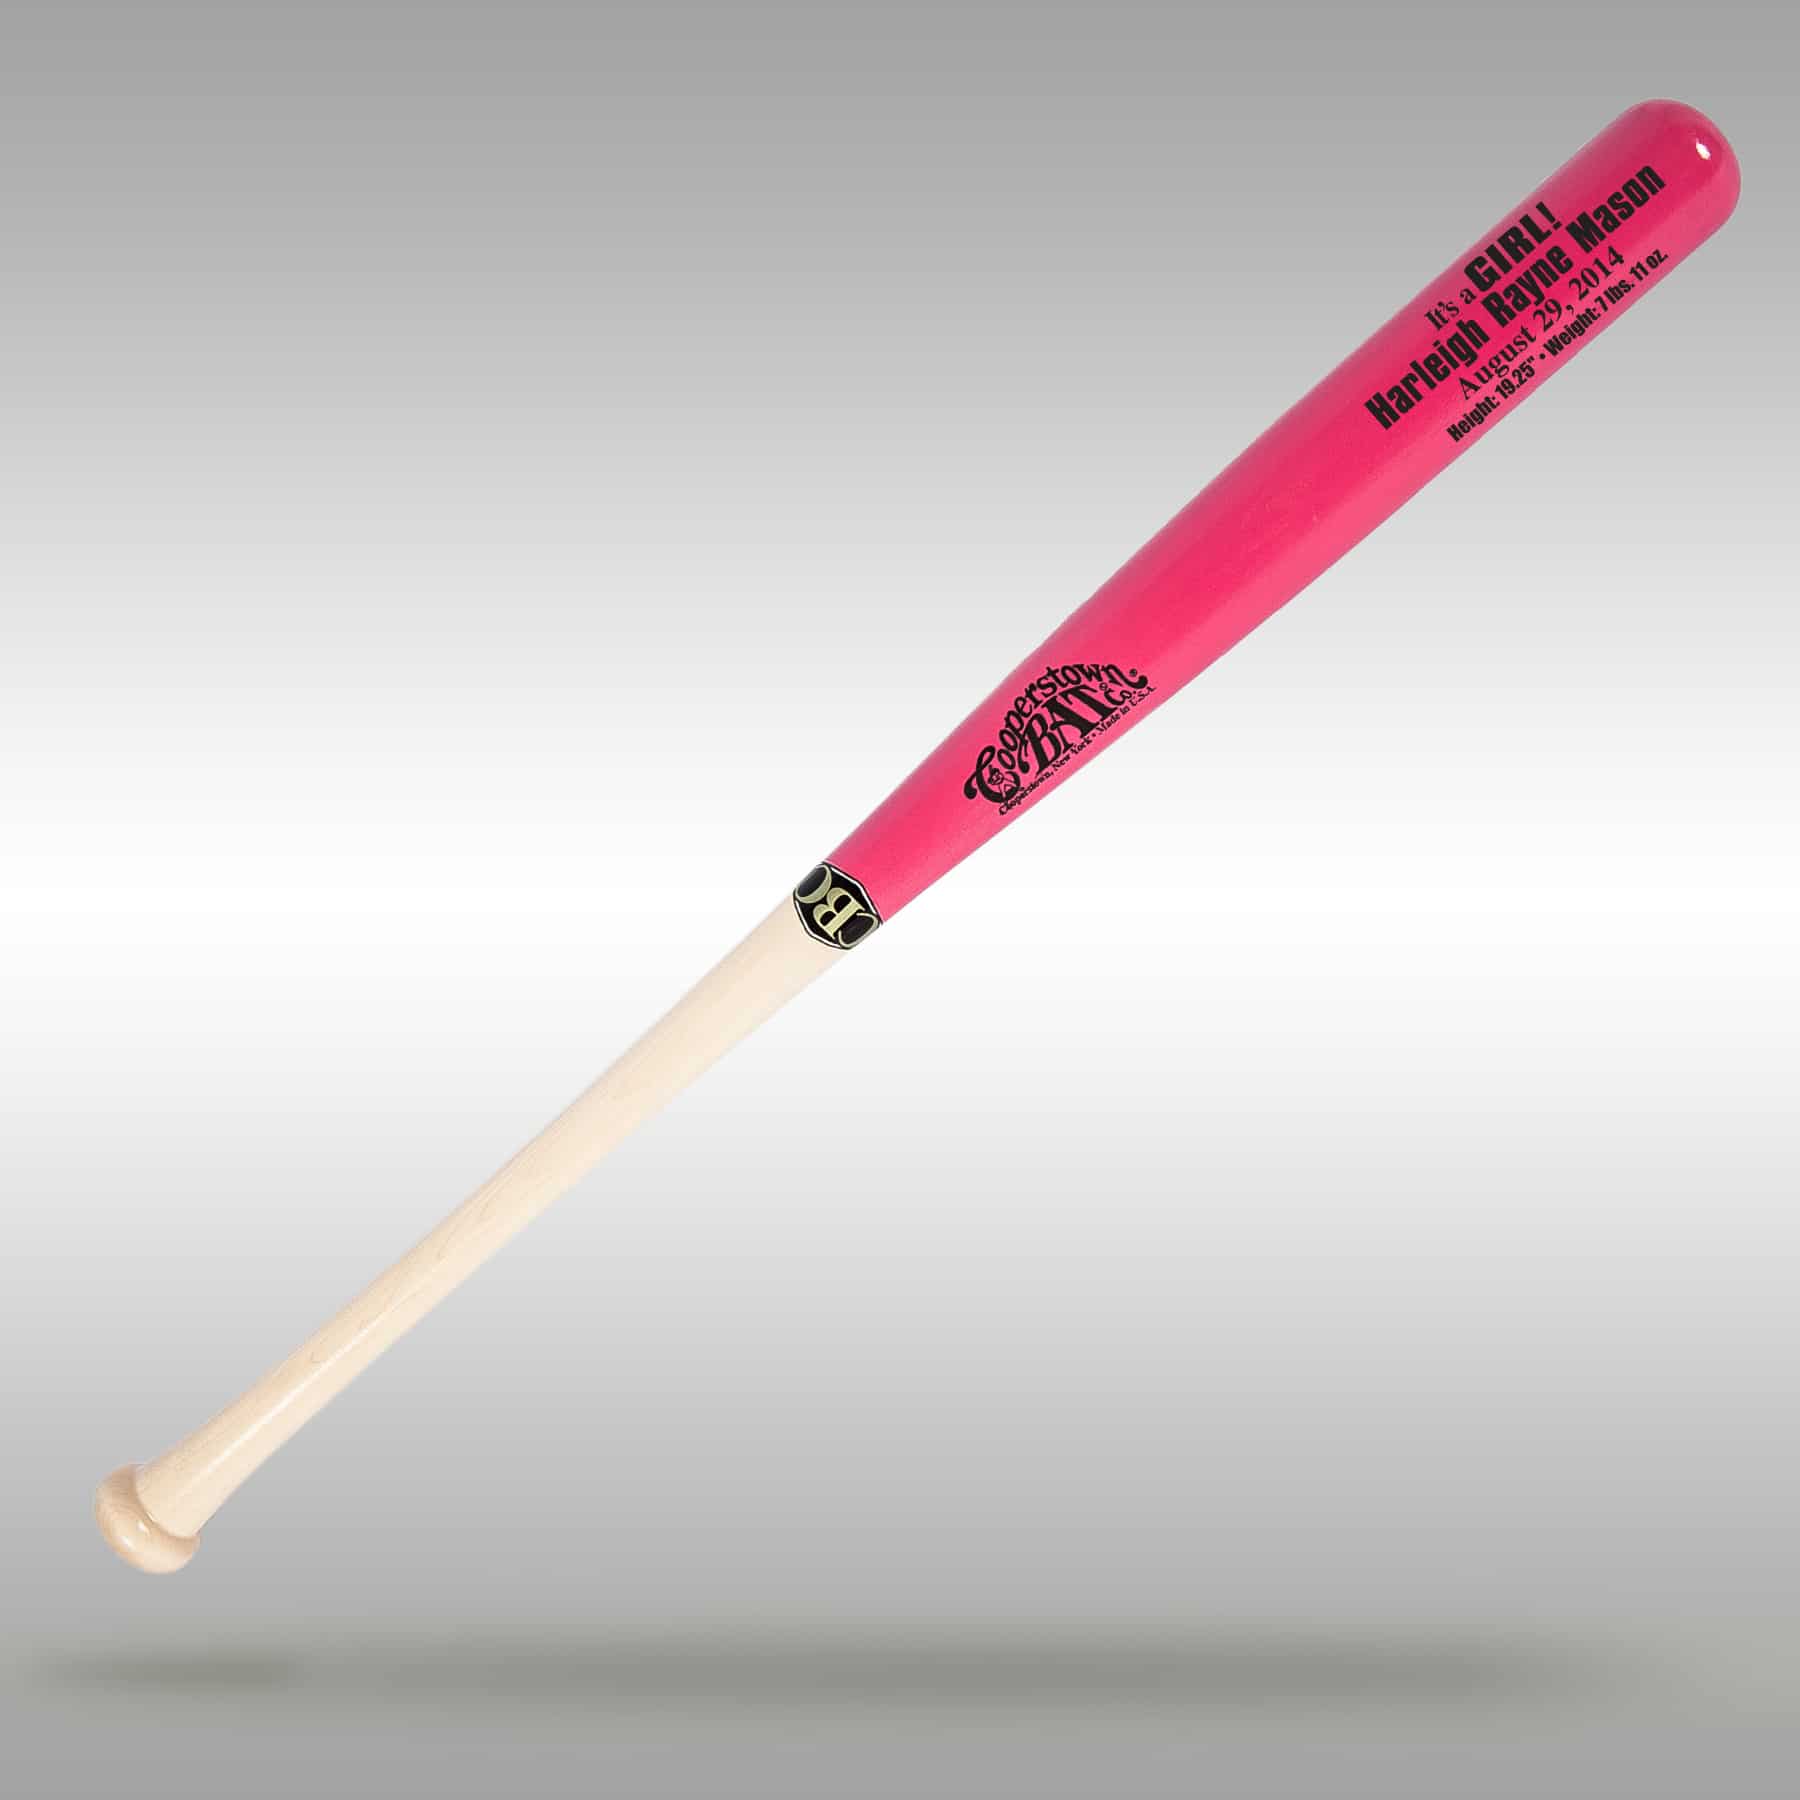 18 Personalized bat Pink